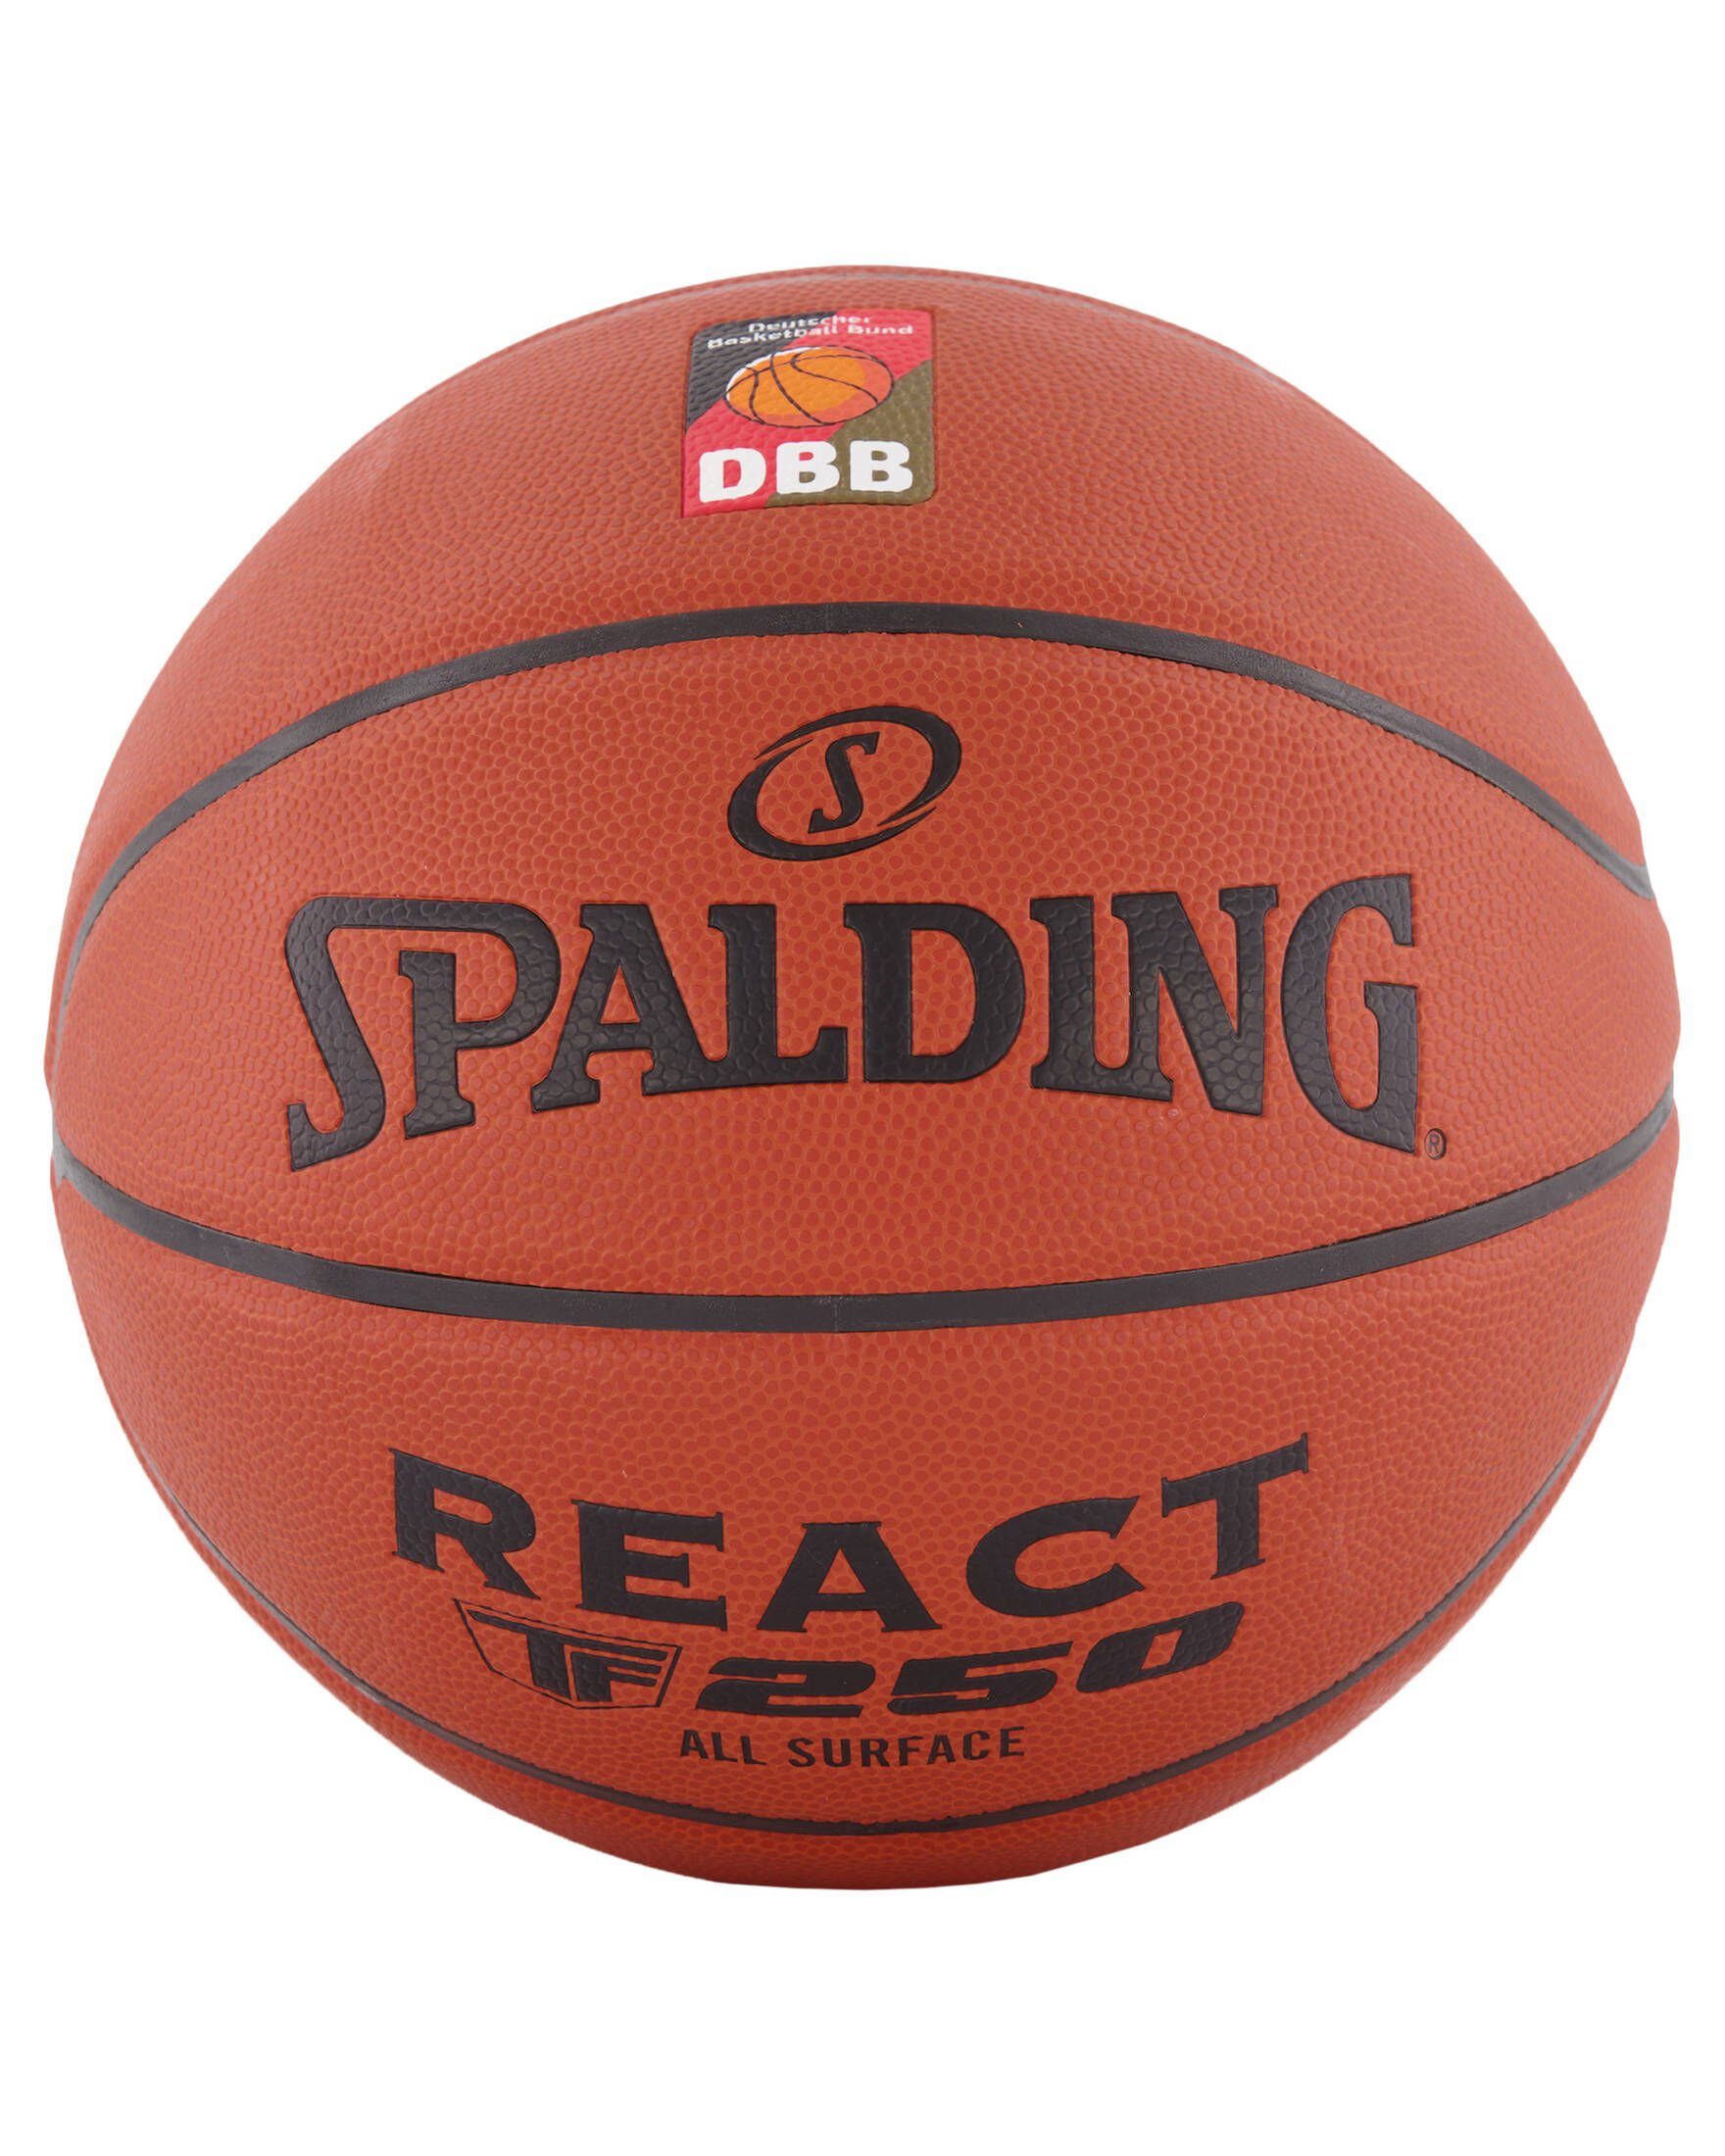 Spalding Basketball Basketball 250 ORANGE REACT TF SERIES